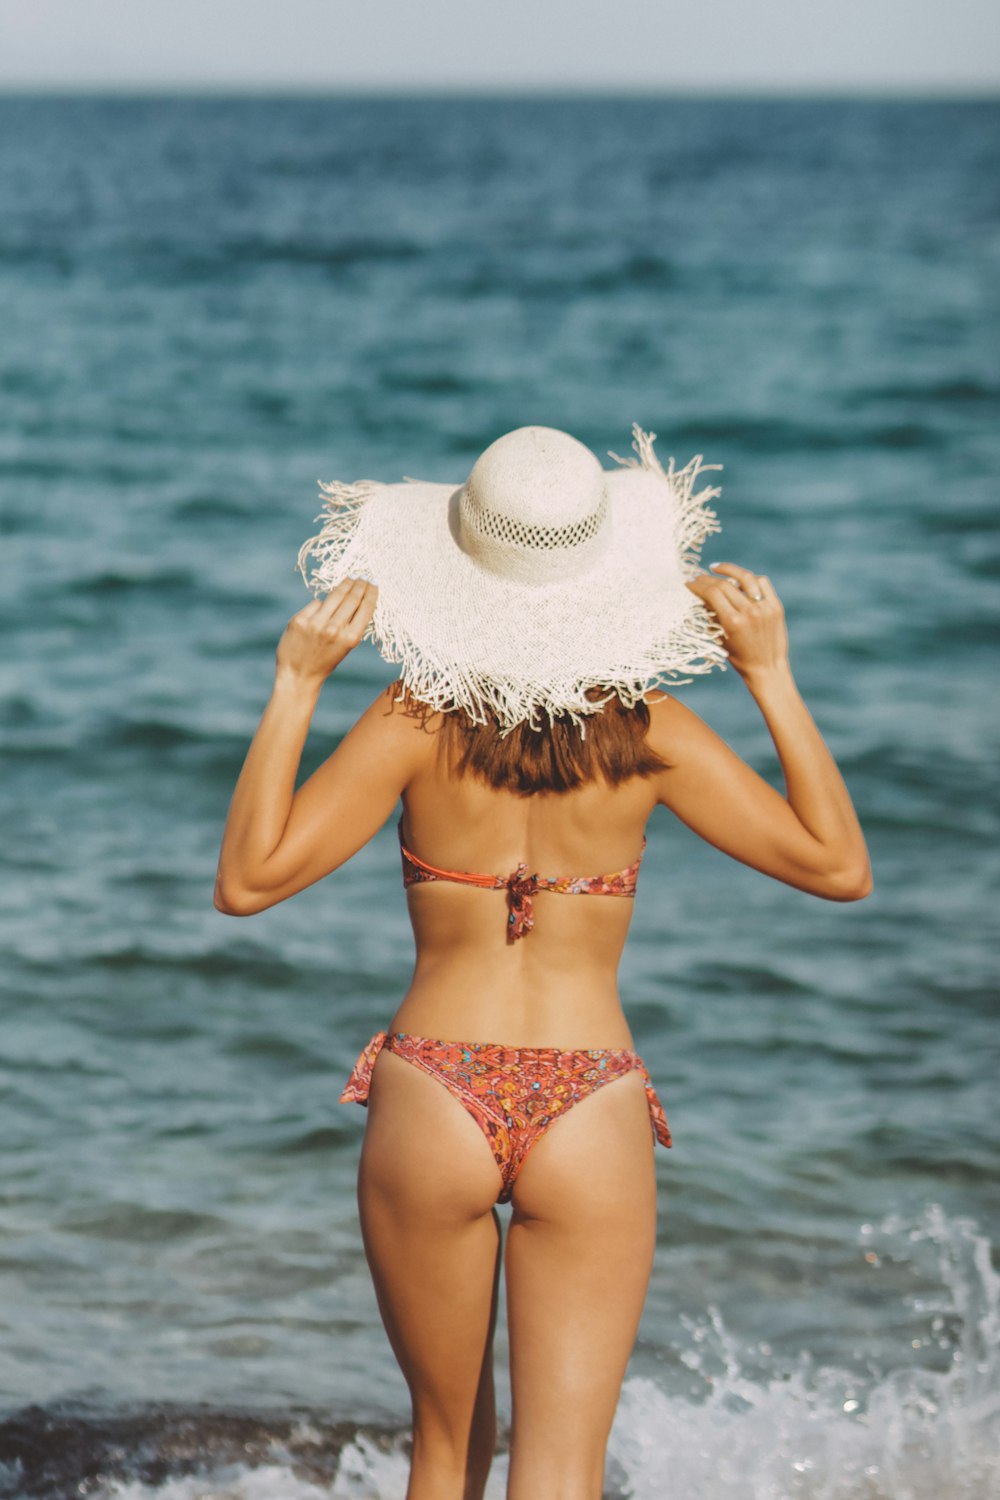 Woman in black bikini bottom and black brassiere on beach during daytime  photo – Free Alicante Image on Unsplash